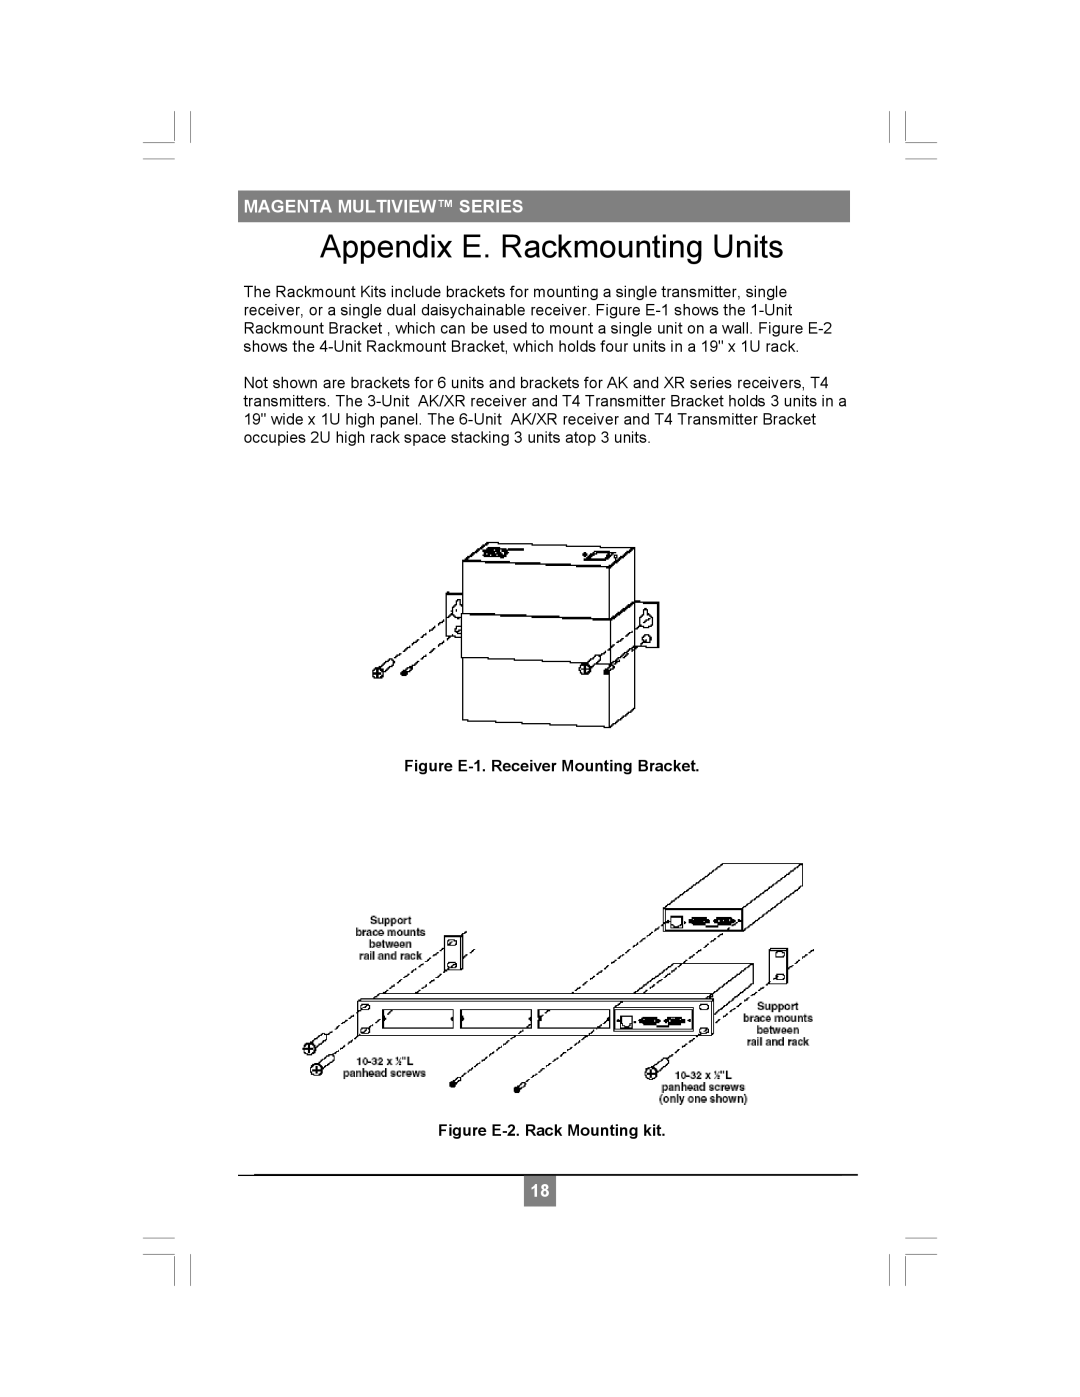 Magenta XR2000 setup guide Appendix E. Rackmounting Units, 1820, Magenta Multiview Series 